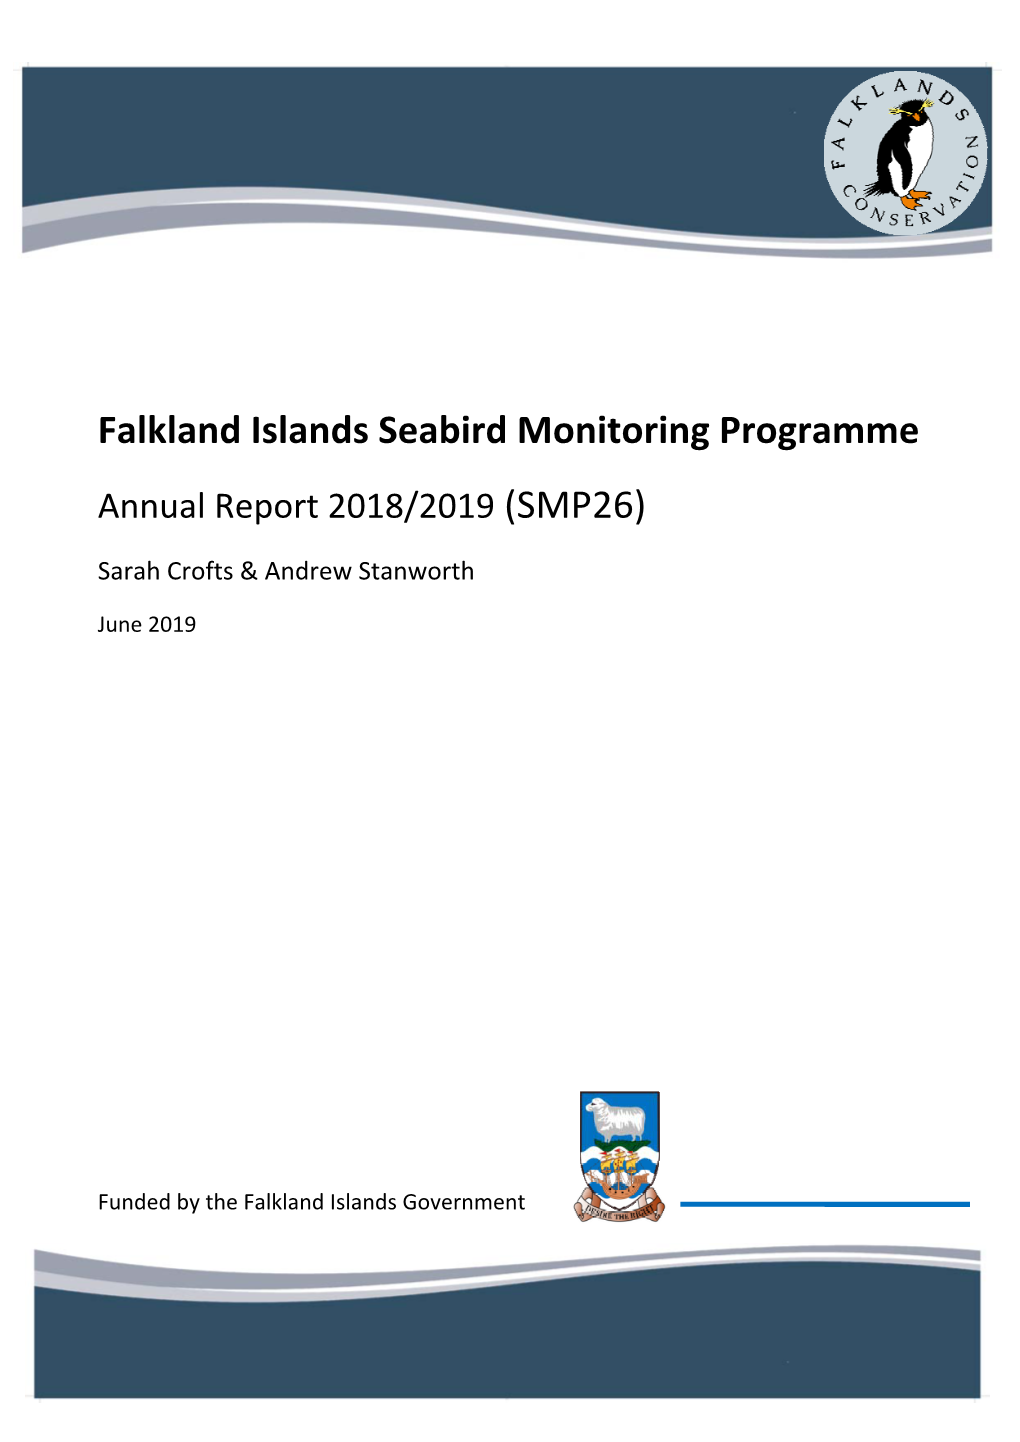 Falkland Islands Seabird Monitoring Programme Annual Report 2018/2019 (SMP26)